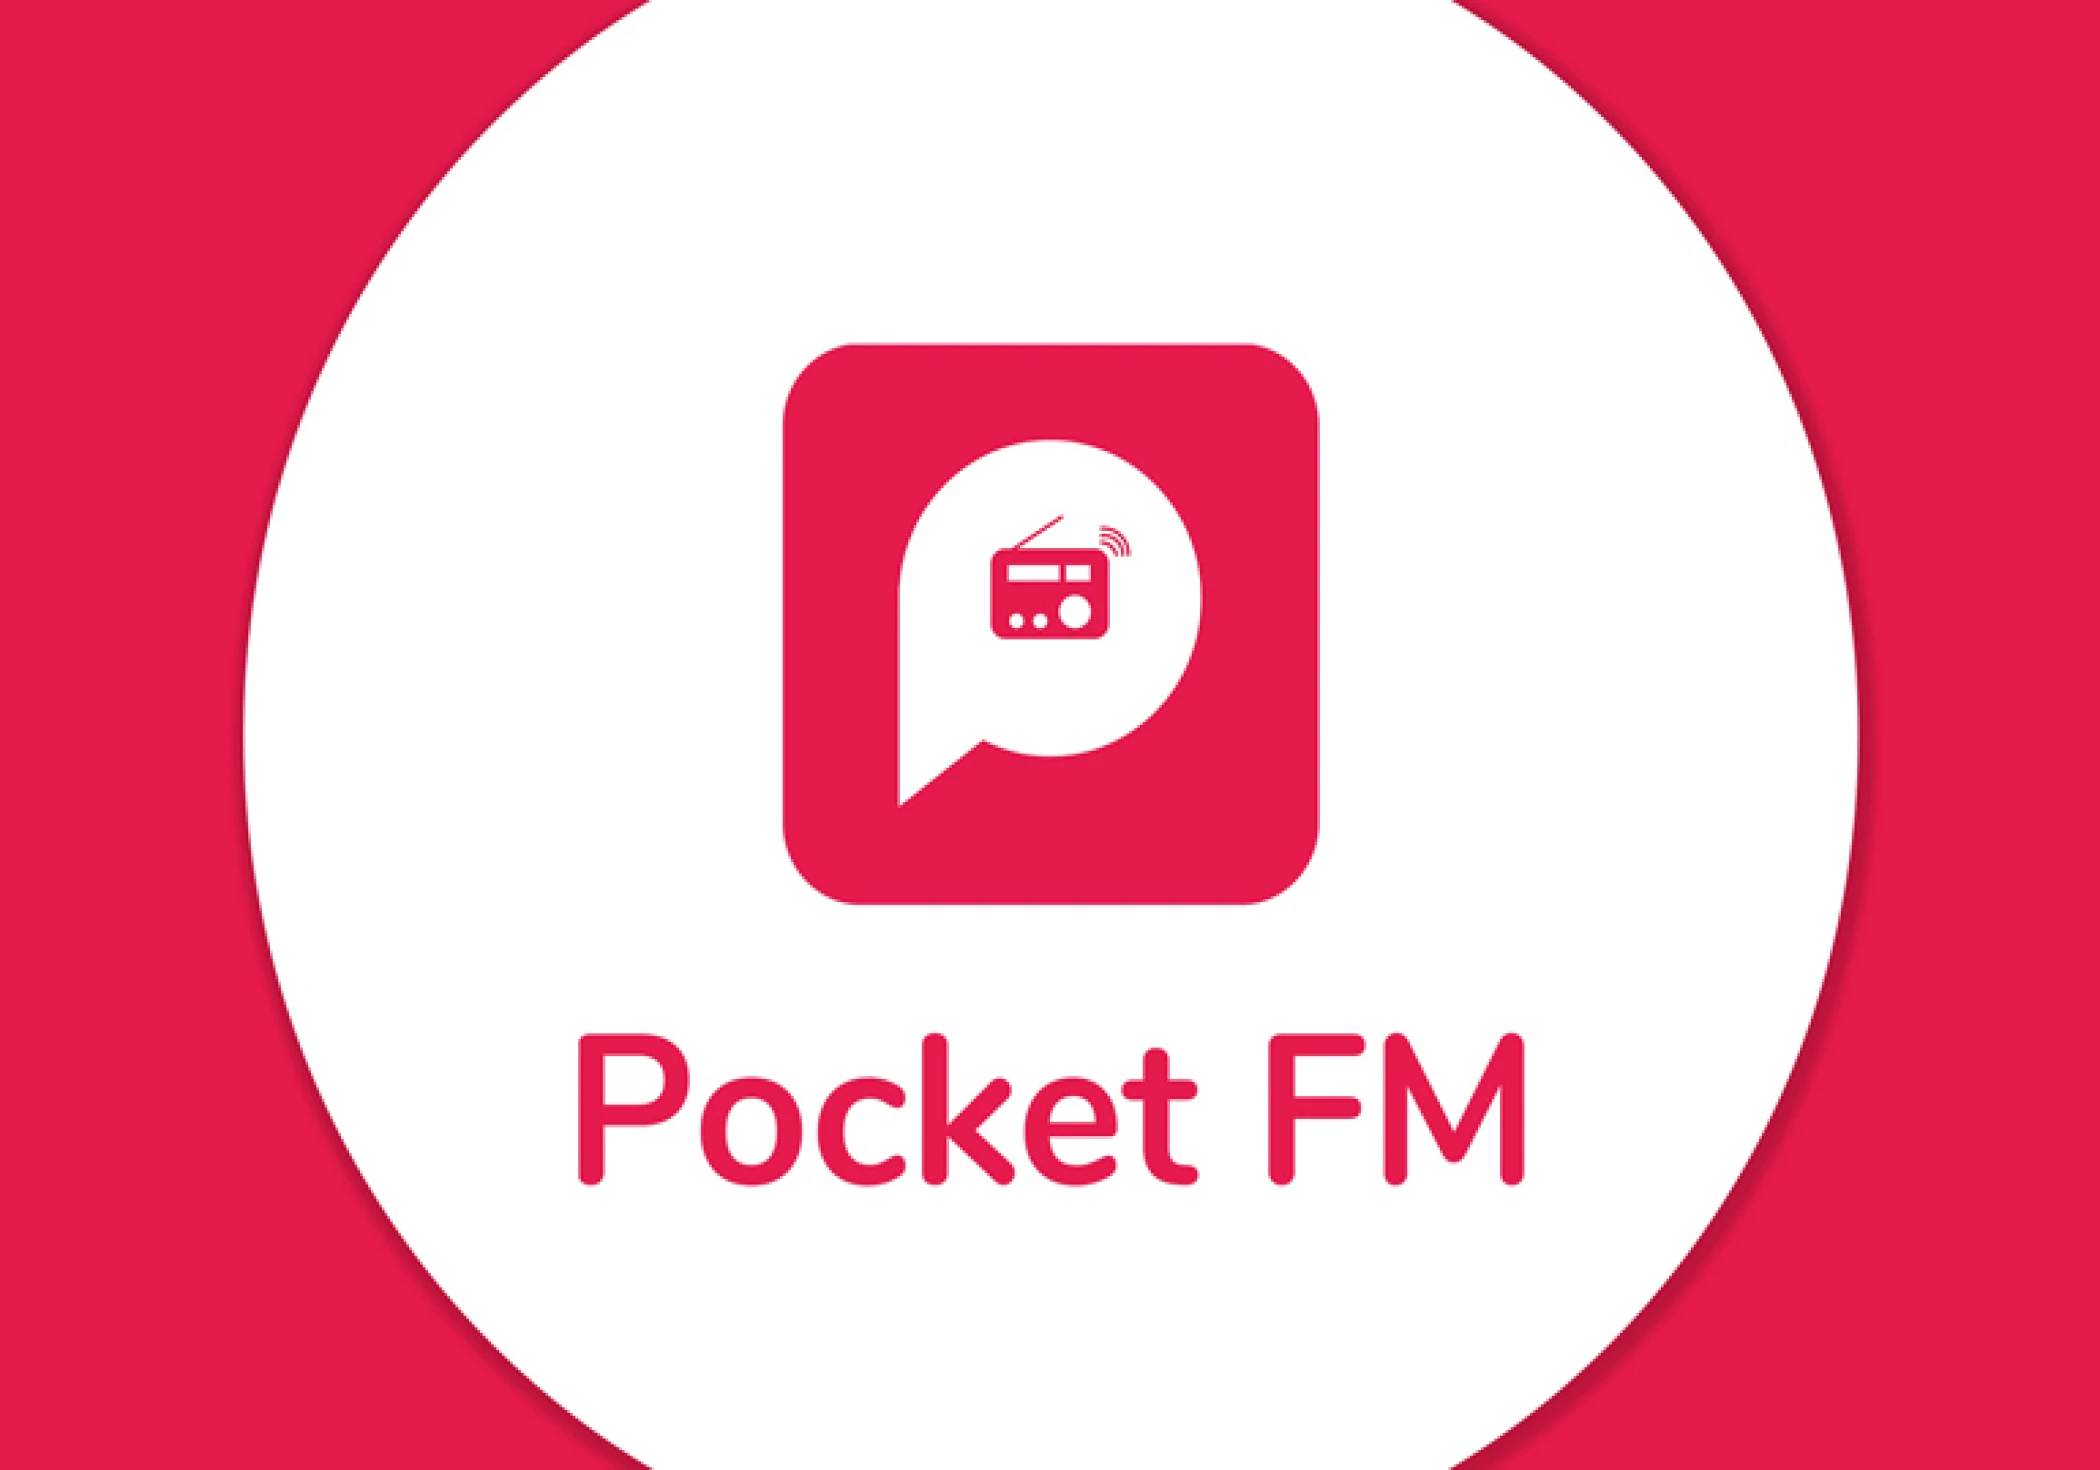 Pocket FM Rewards Employees with First ESOP Buyback Program Worth $8.3 Million